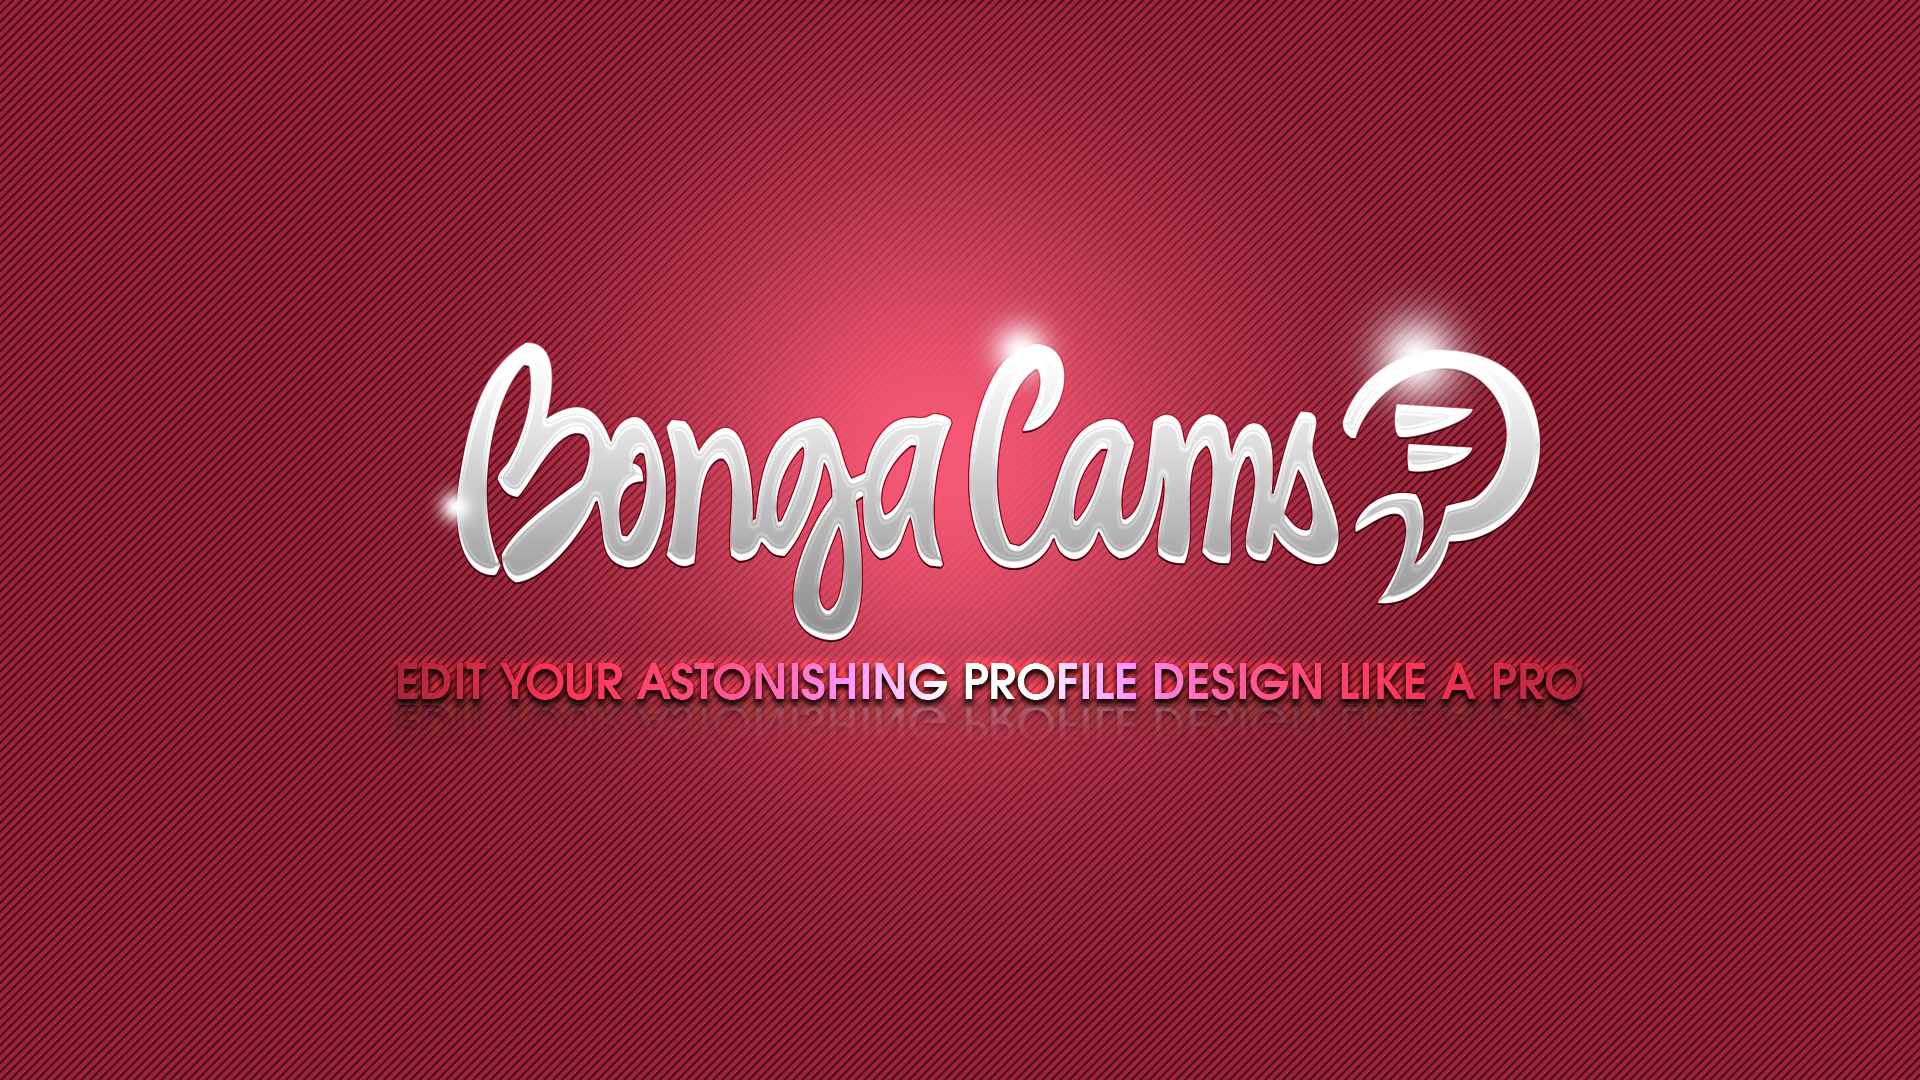 Bongacams com 27. Bongacams логотип. Бонгакамс логотип. Bongacams значок. Бонгакам видеореклама.